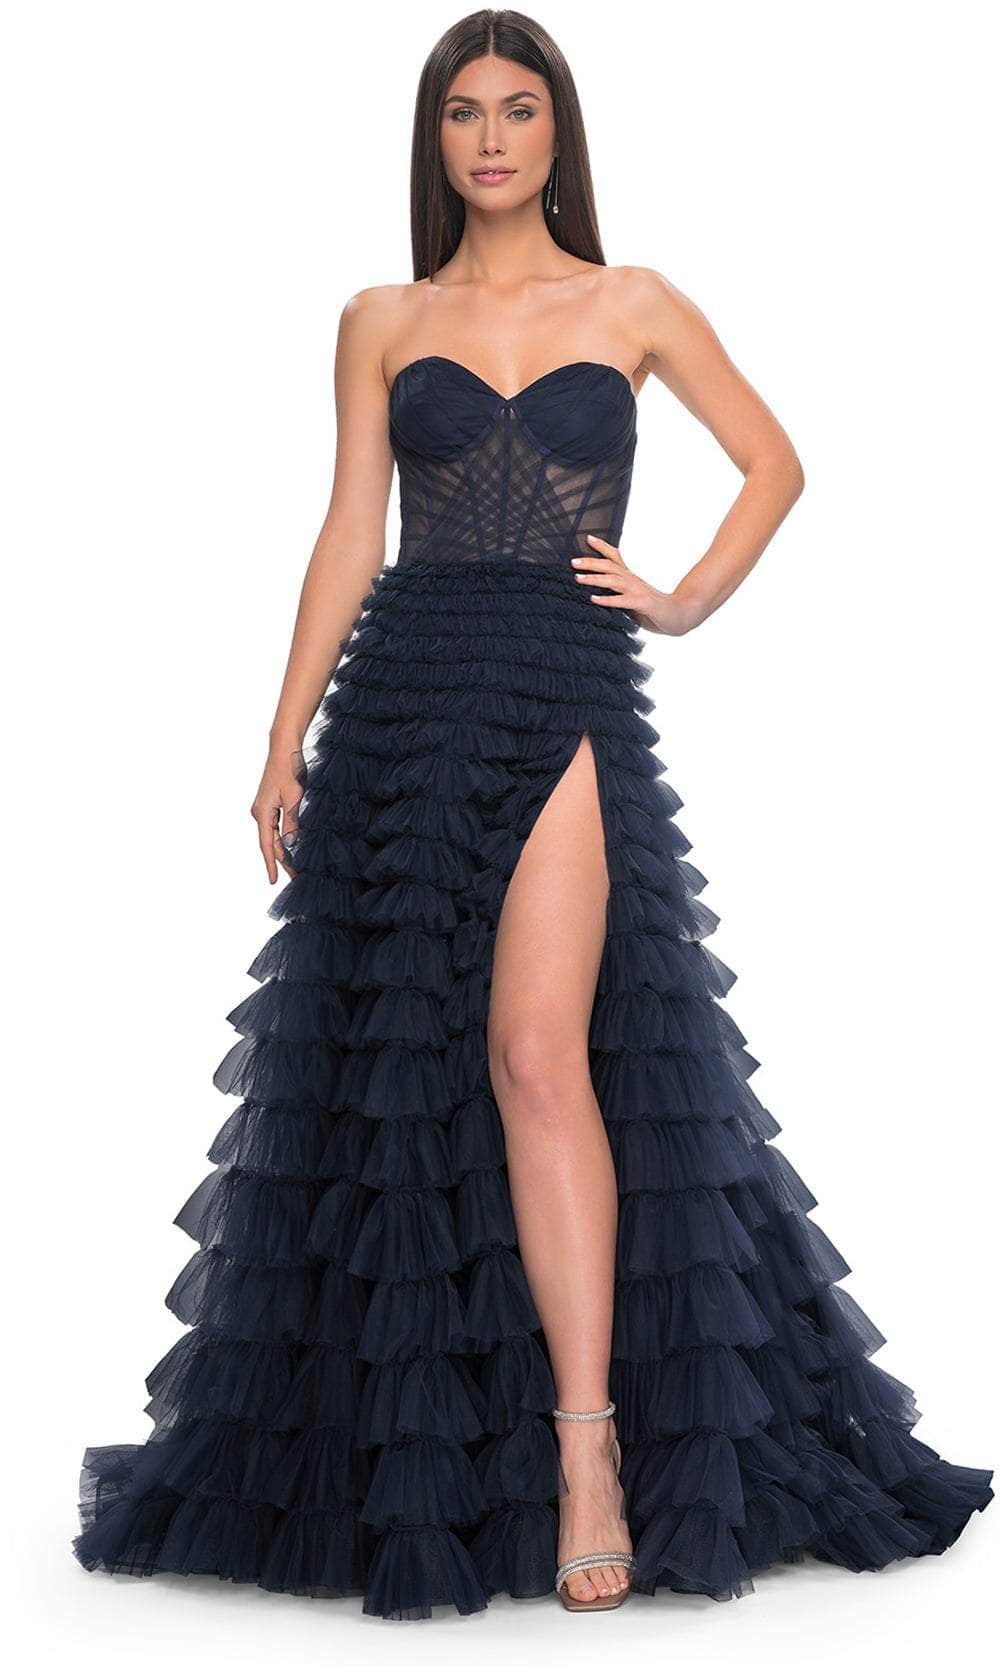 La Femme 32283 - Tiered A-Line Prom Dress
